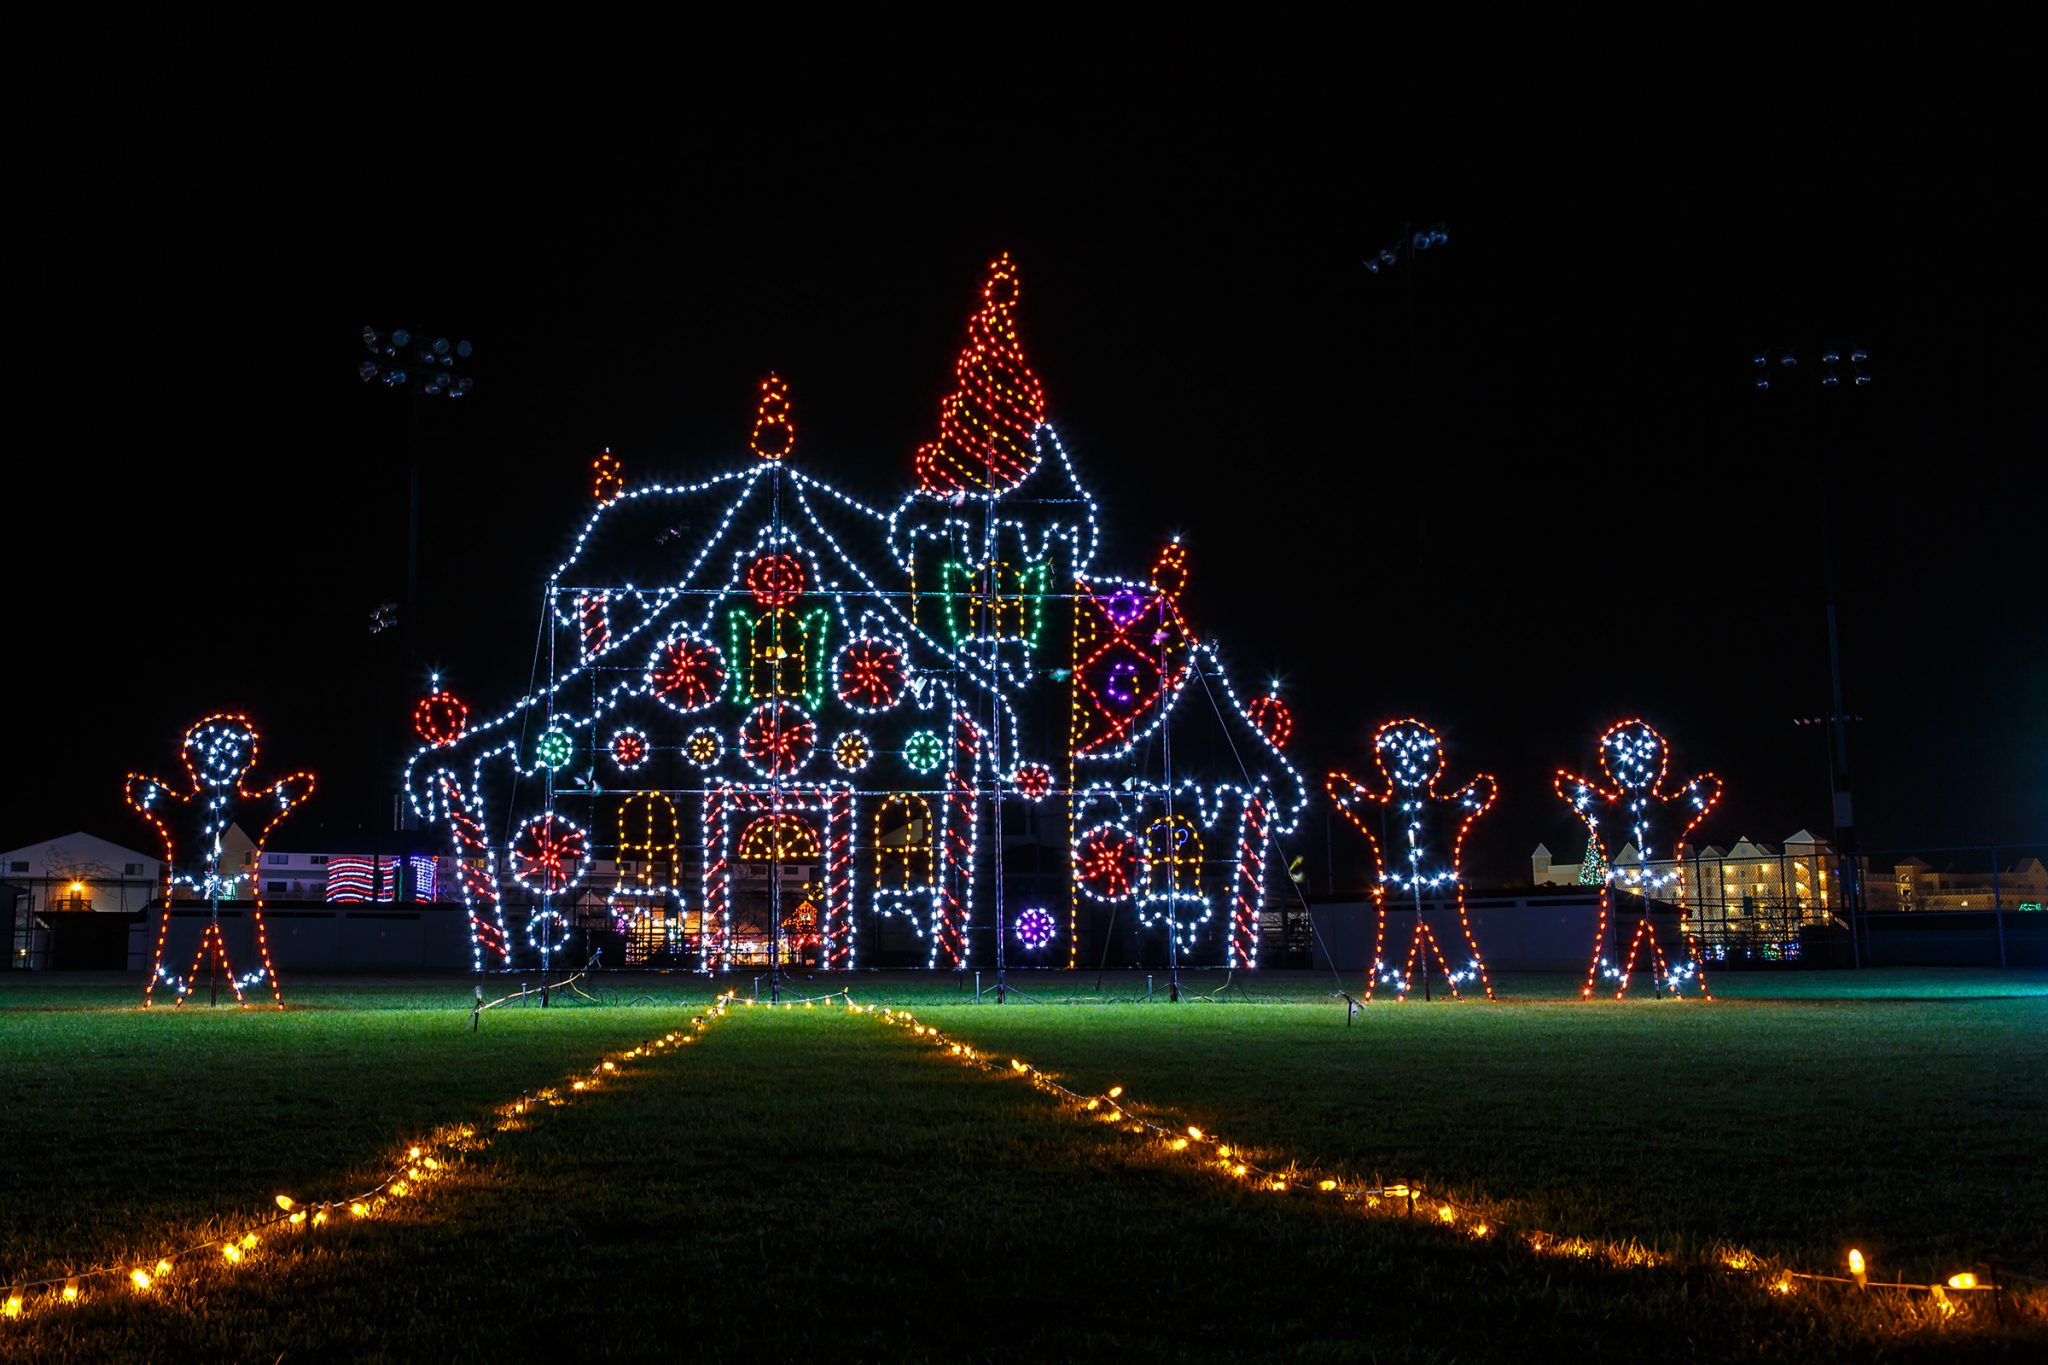 Winterfest Christmas lights display in Ocean City, Maryland